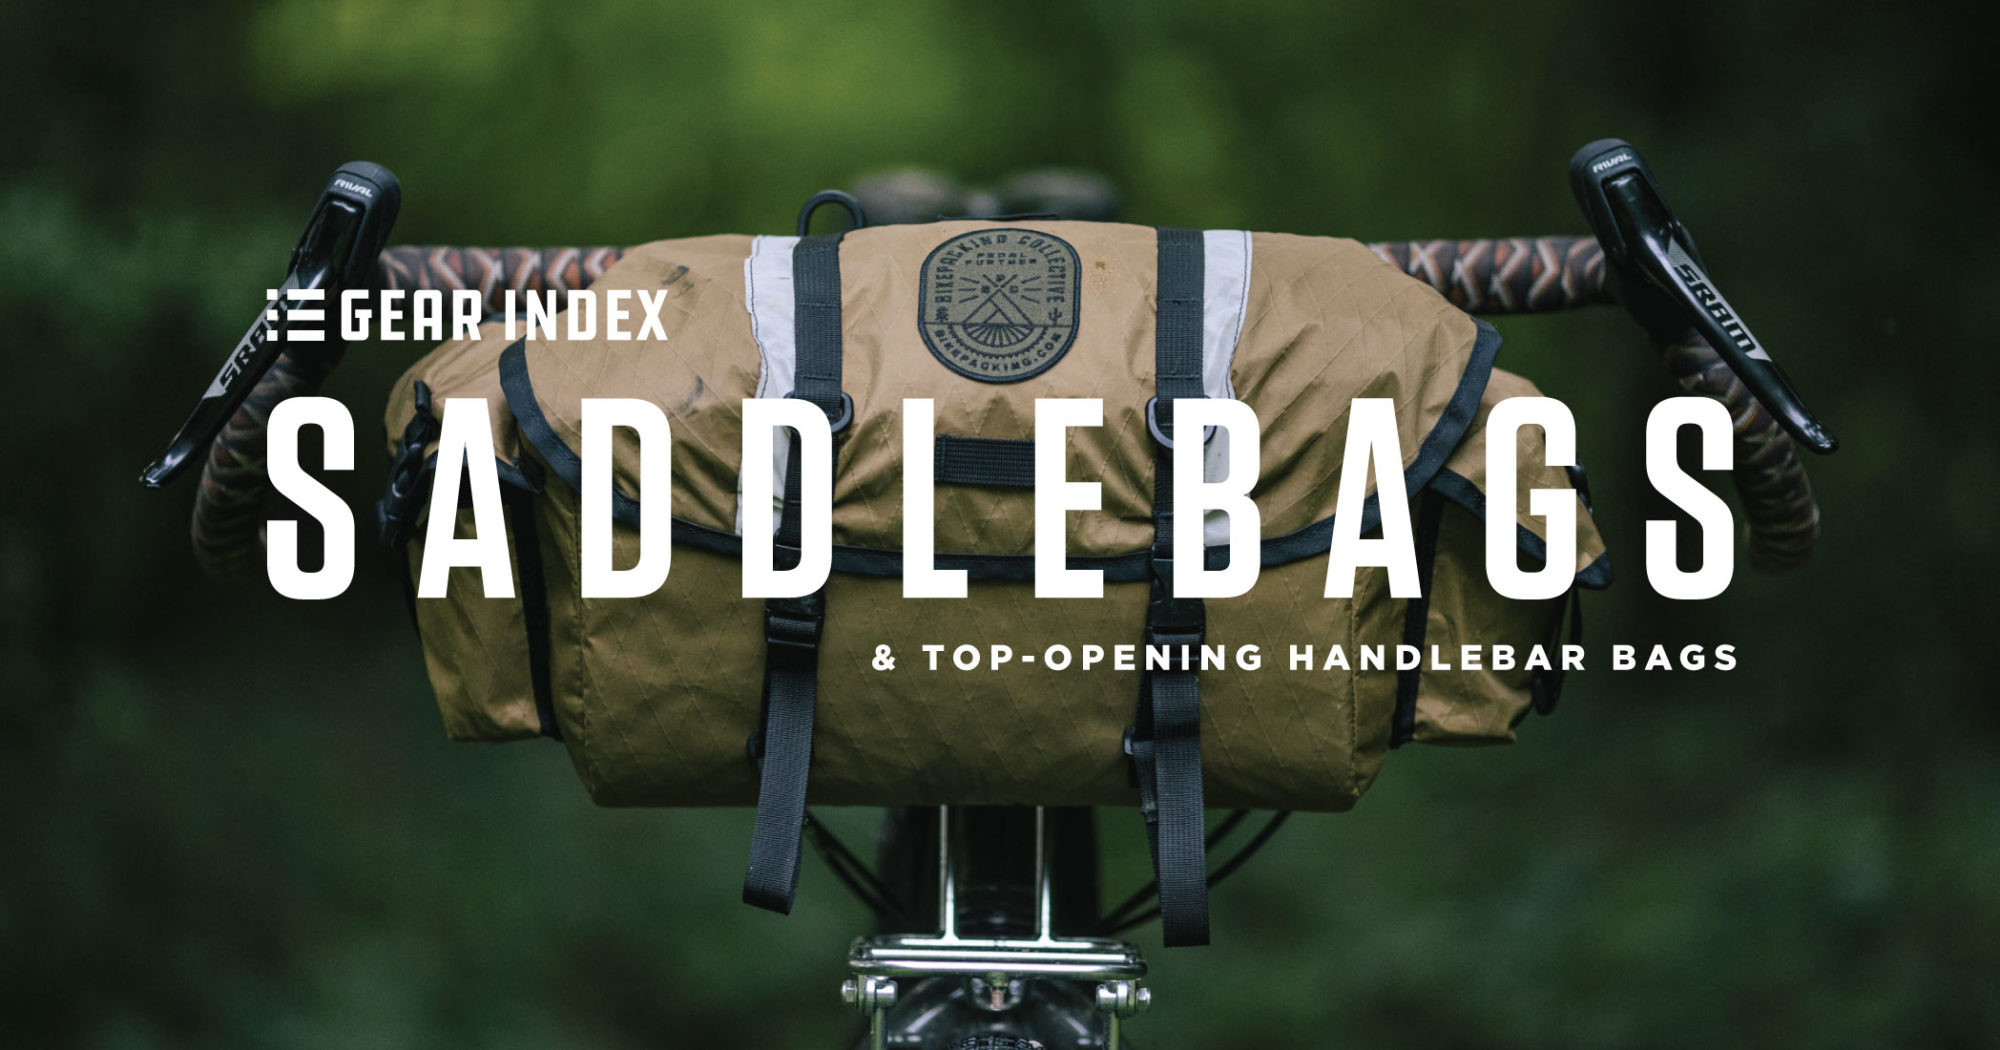 List of Saddlebags and Top-opening handlebar bags